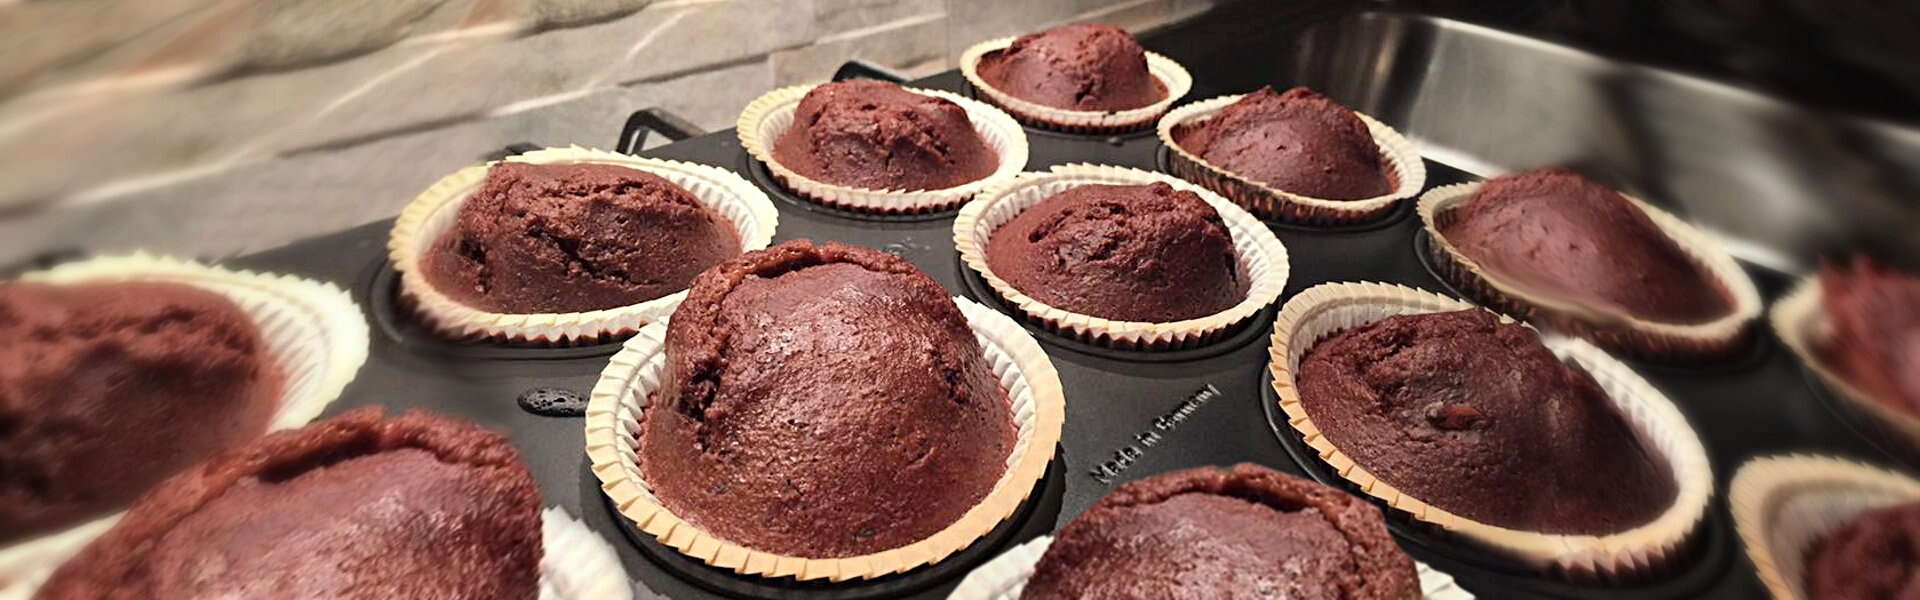 Molten chocolate lava cupcakes